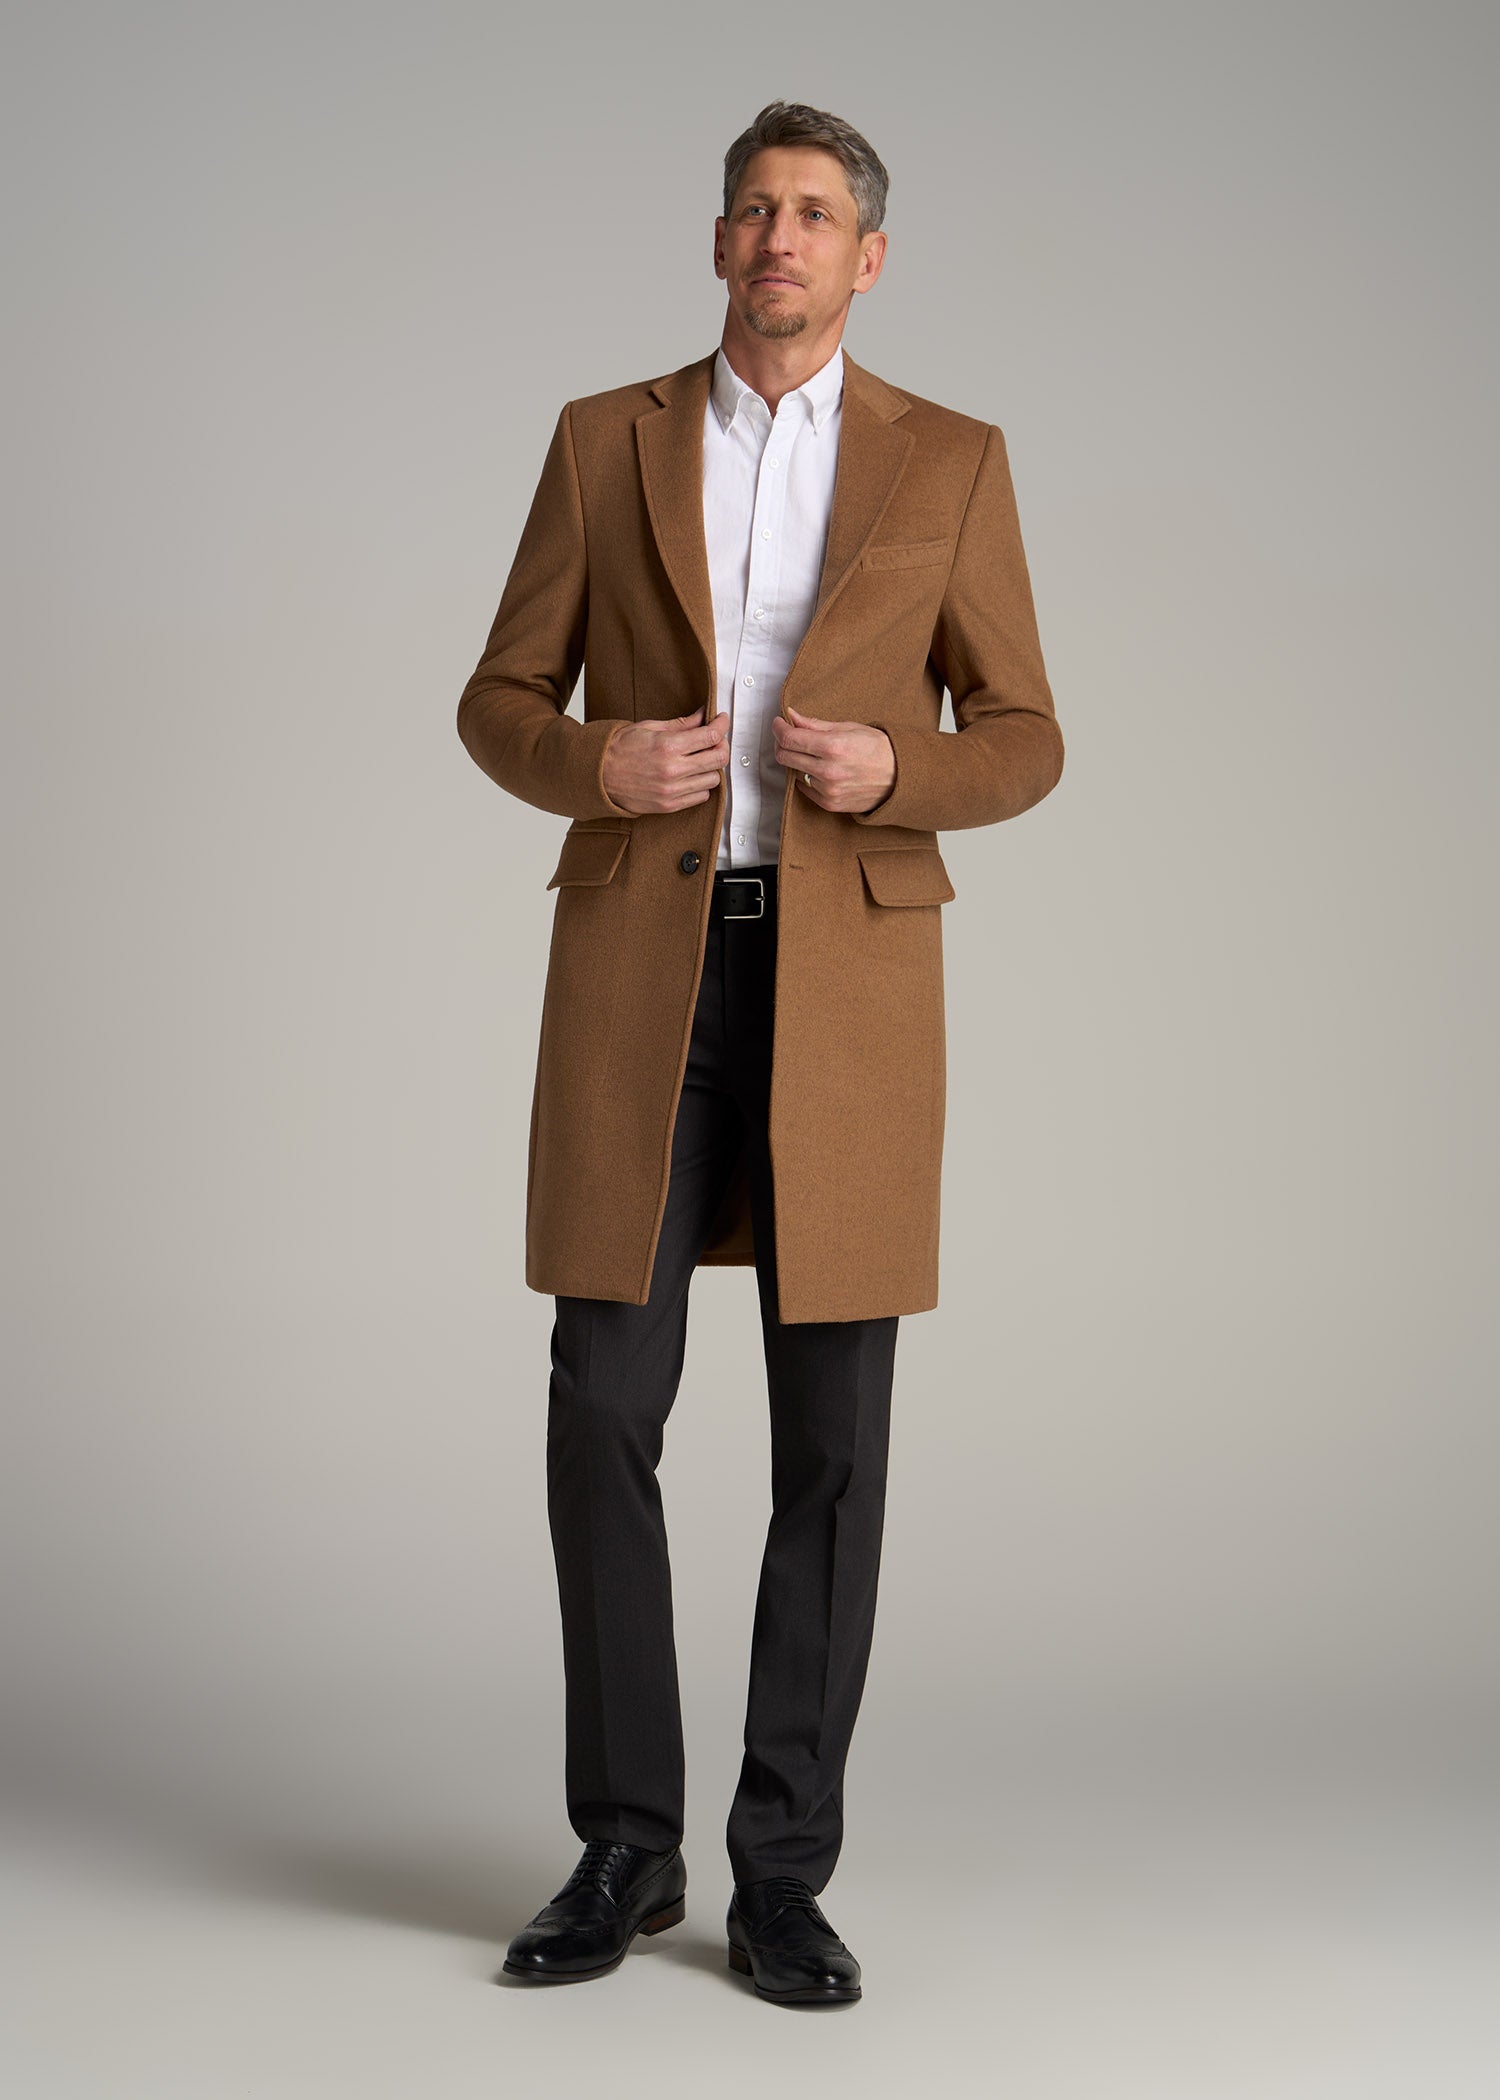 Gent's Business Formal Slim Fit Tuxedo Professional Wear Best Man Wedding  Dress Suit Brown at Amazon Men's Clothing store